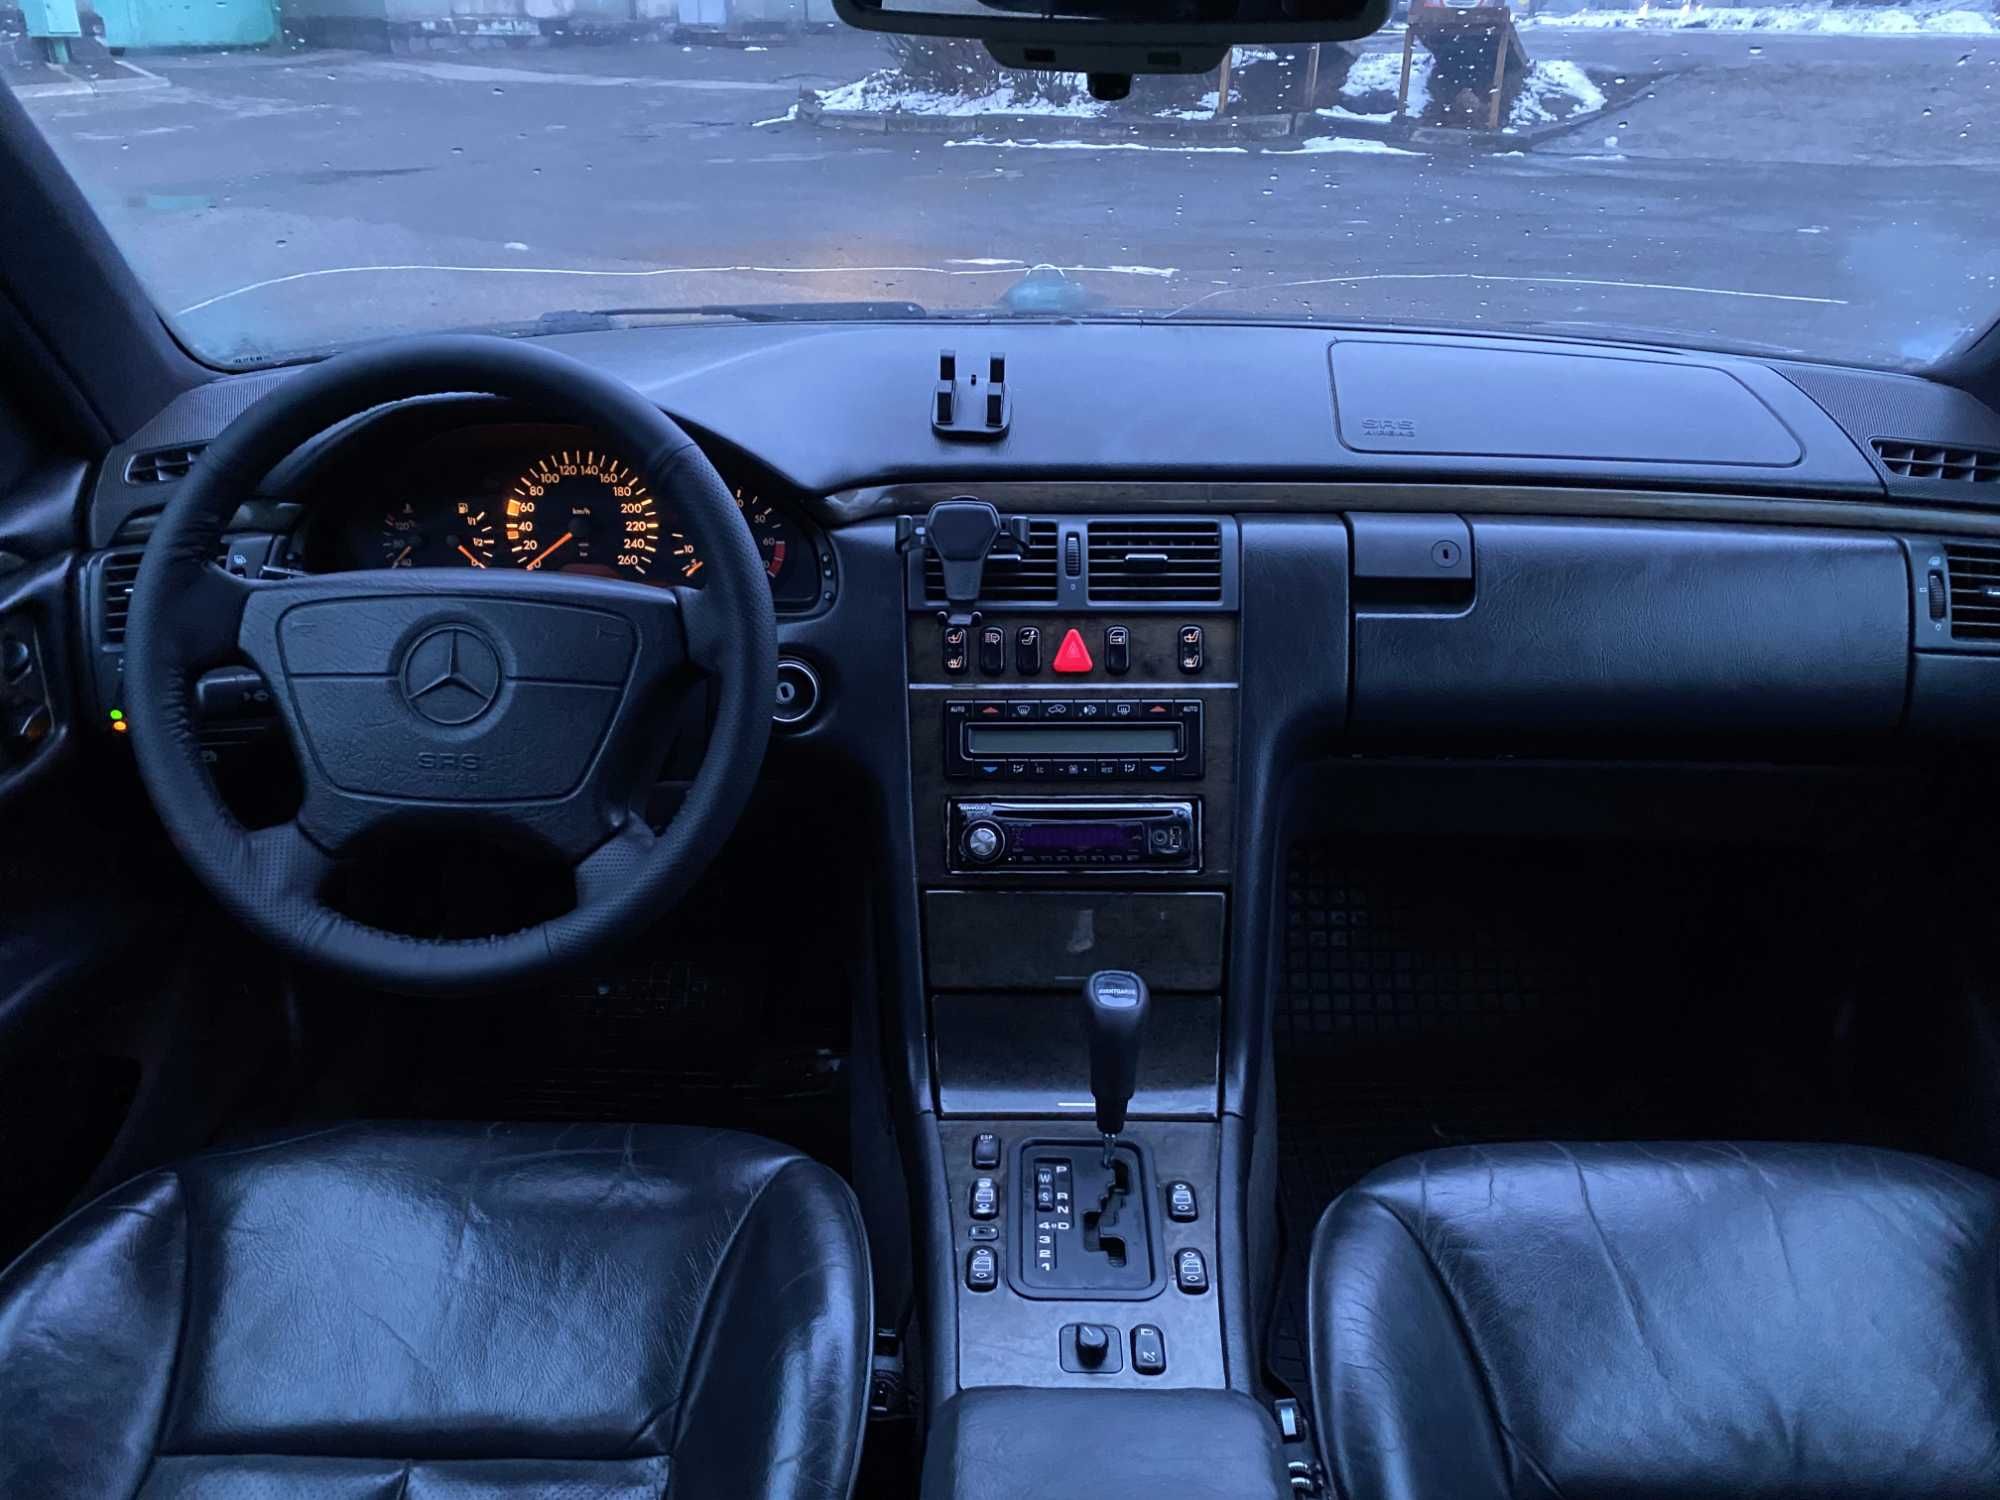 Mercedes-Benz W210 4.2 E-Class 1997